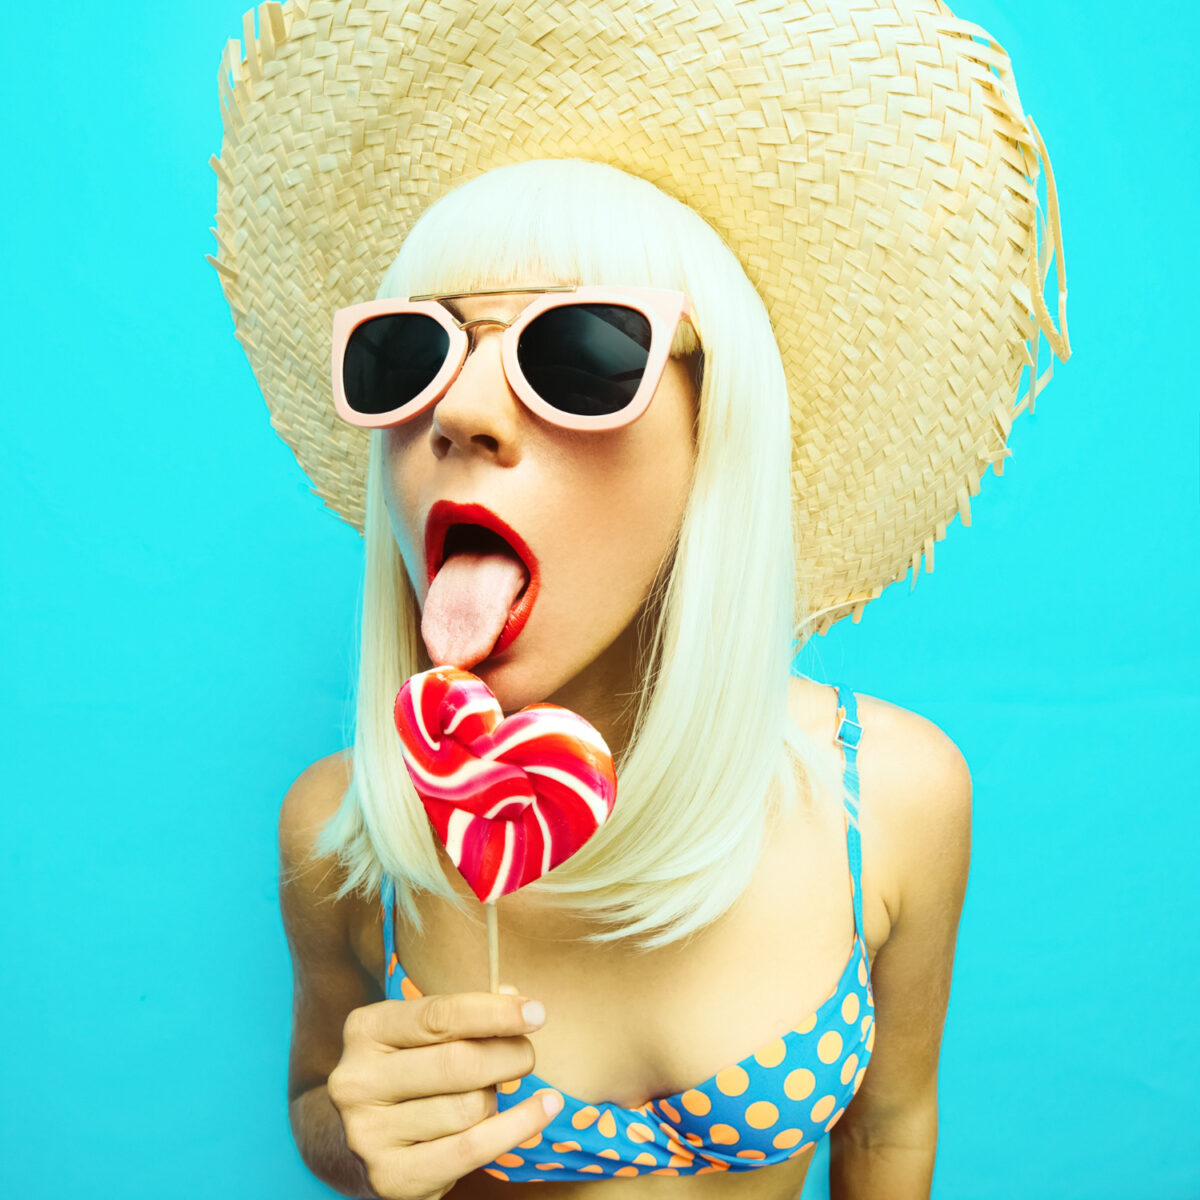 sensual blonde in polka dot blue swimsuit licking lollipop retro style